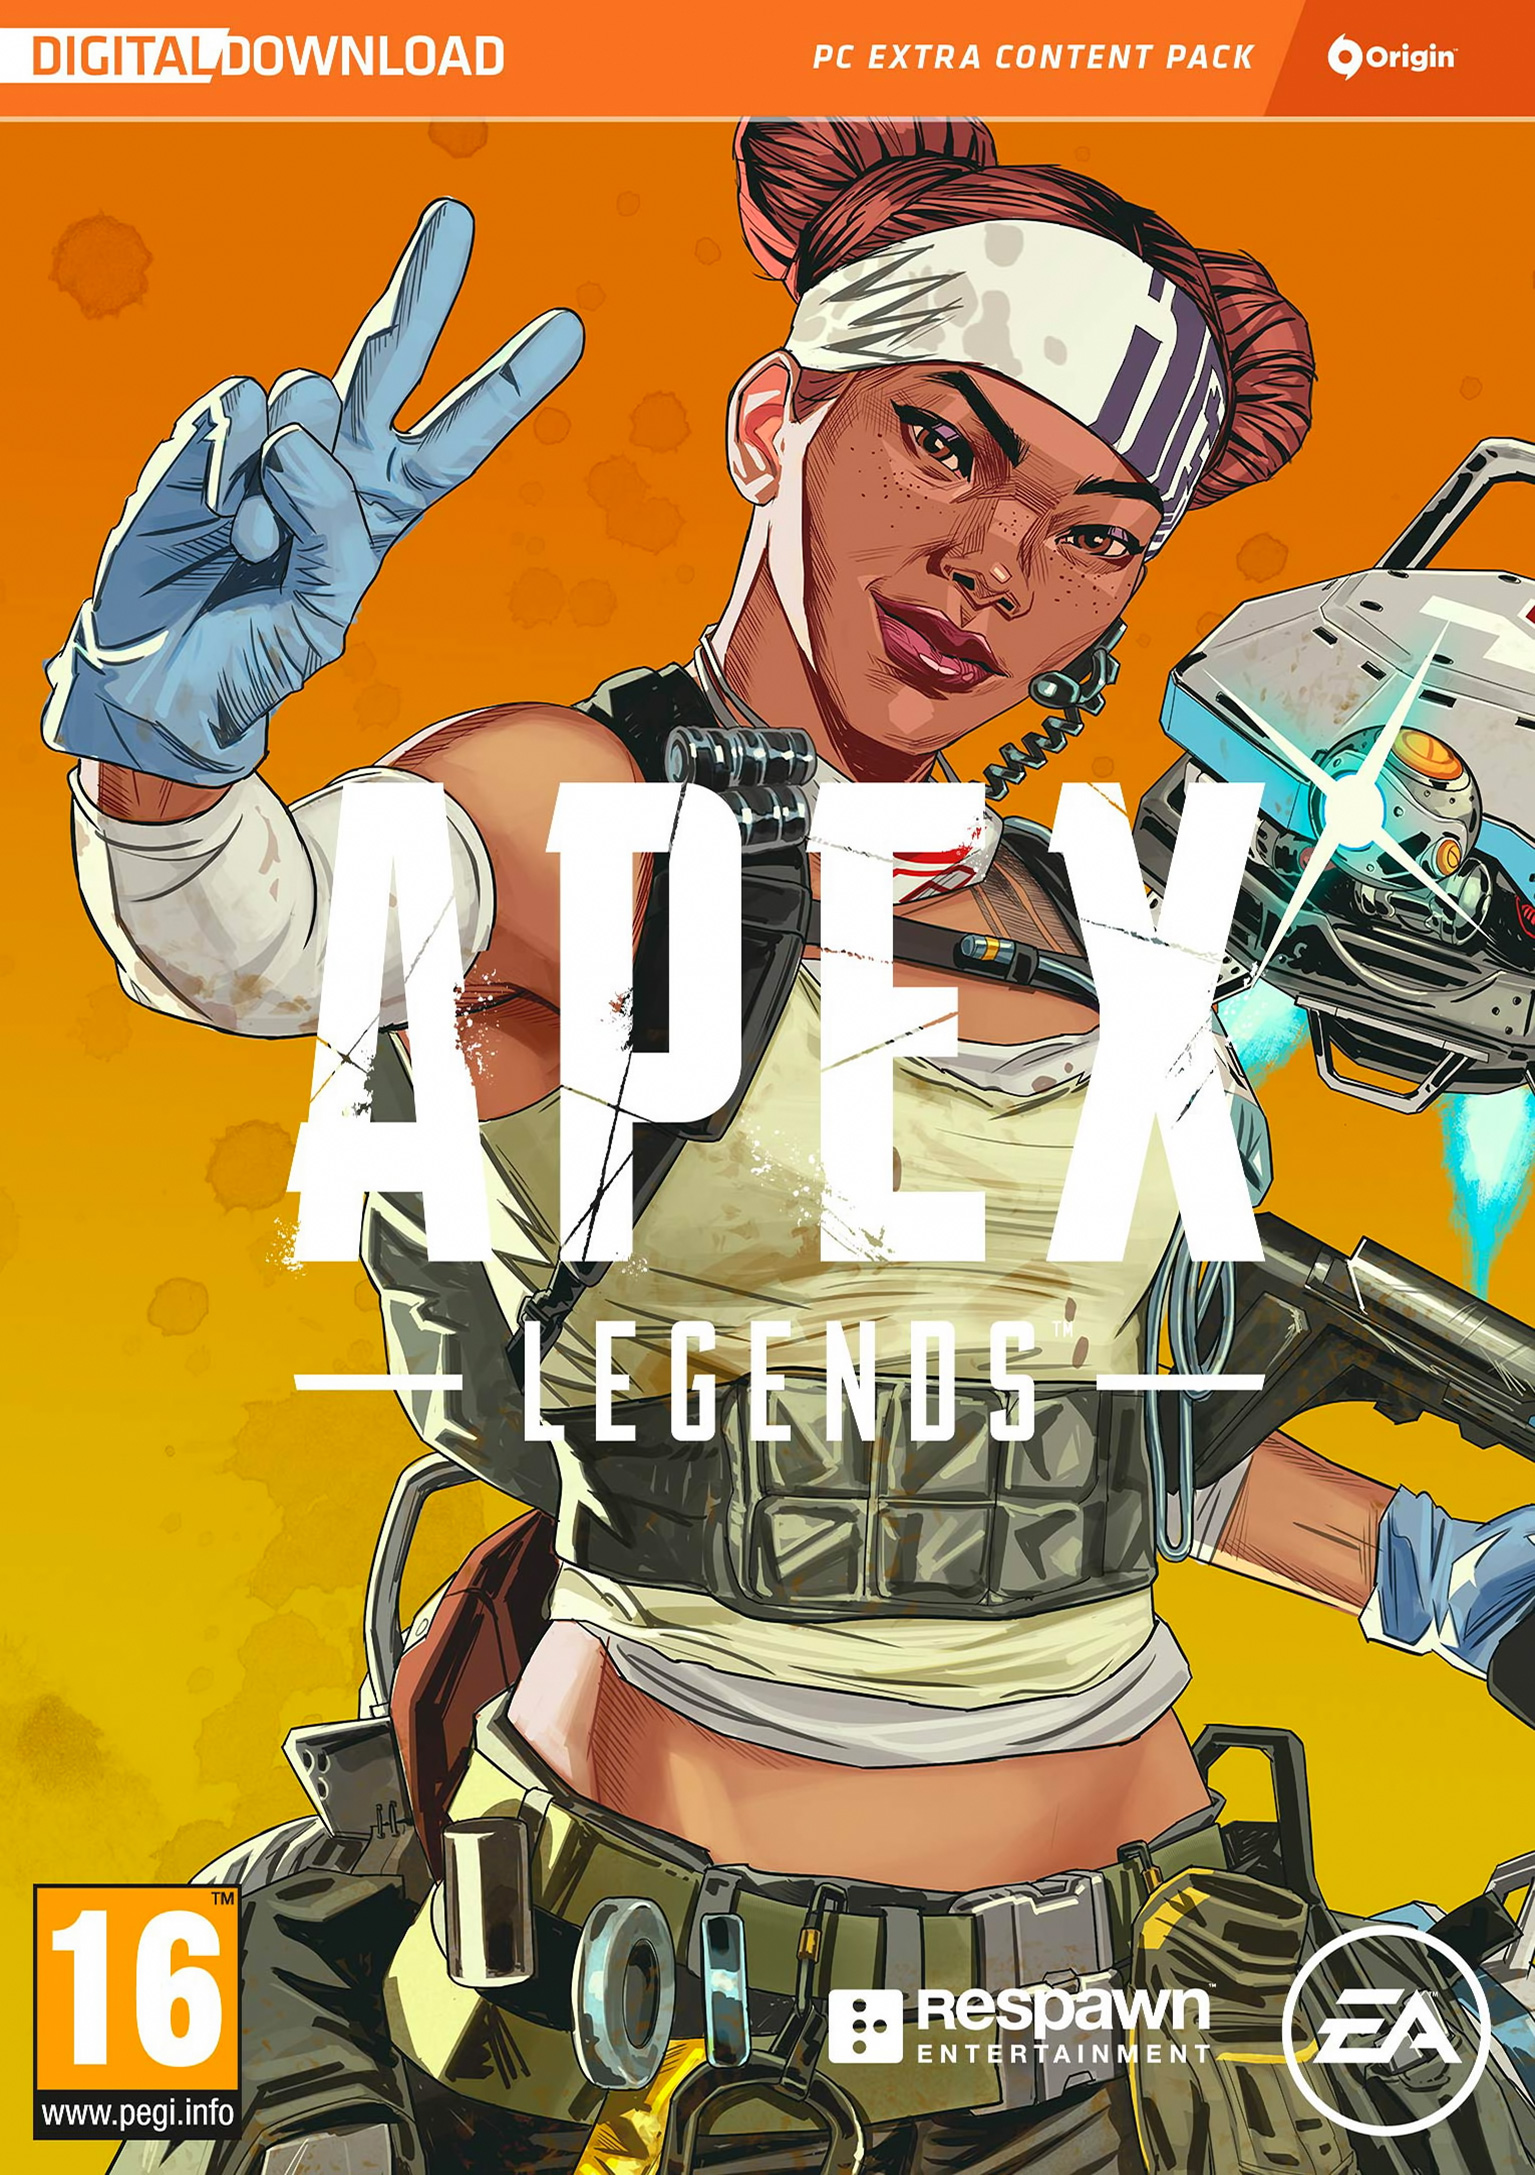 Apex Legends - predn DVD obal